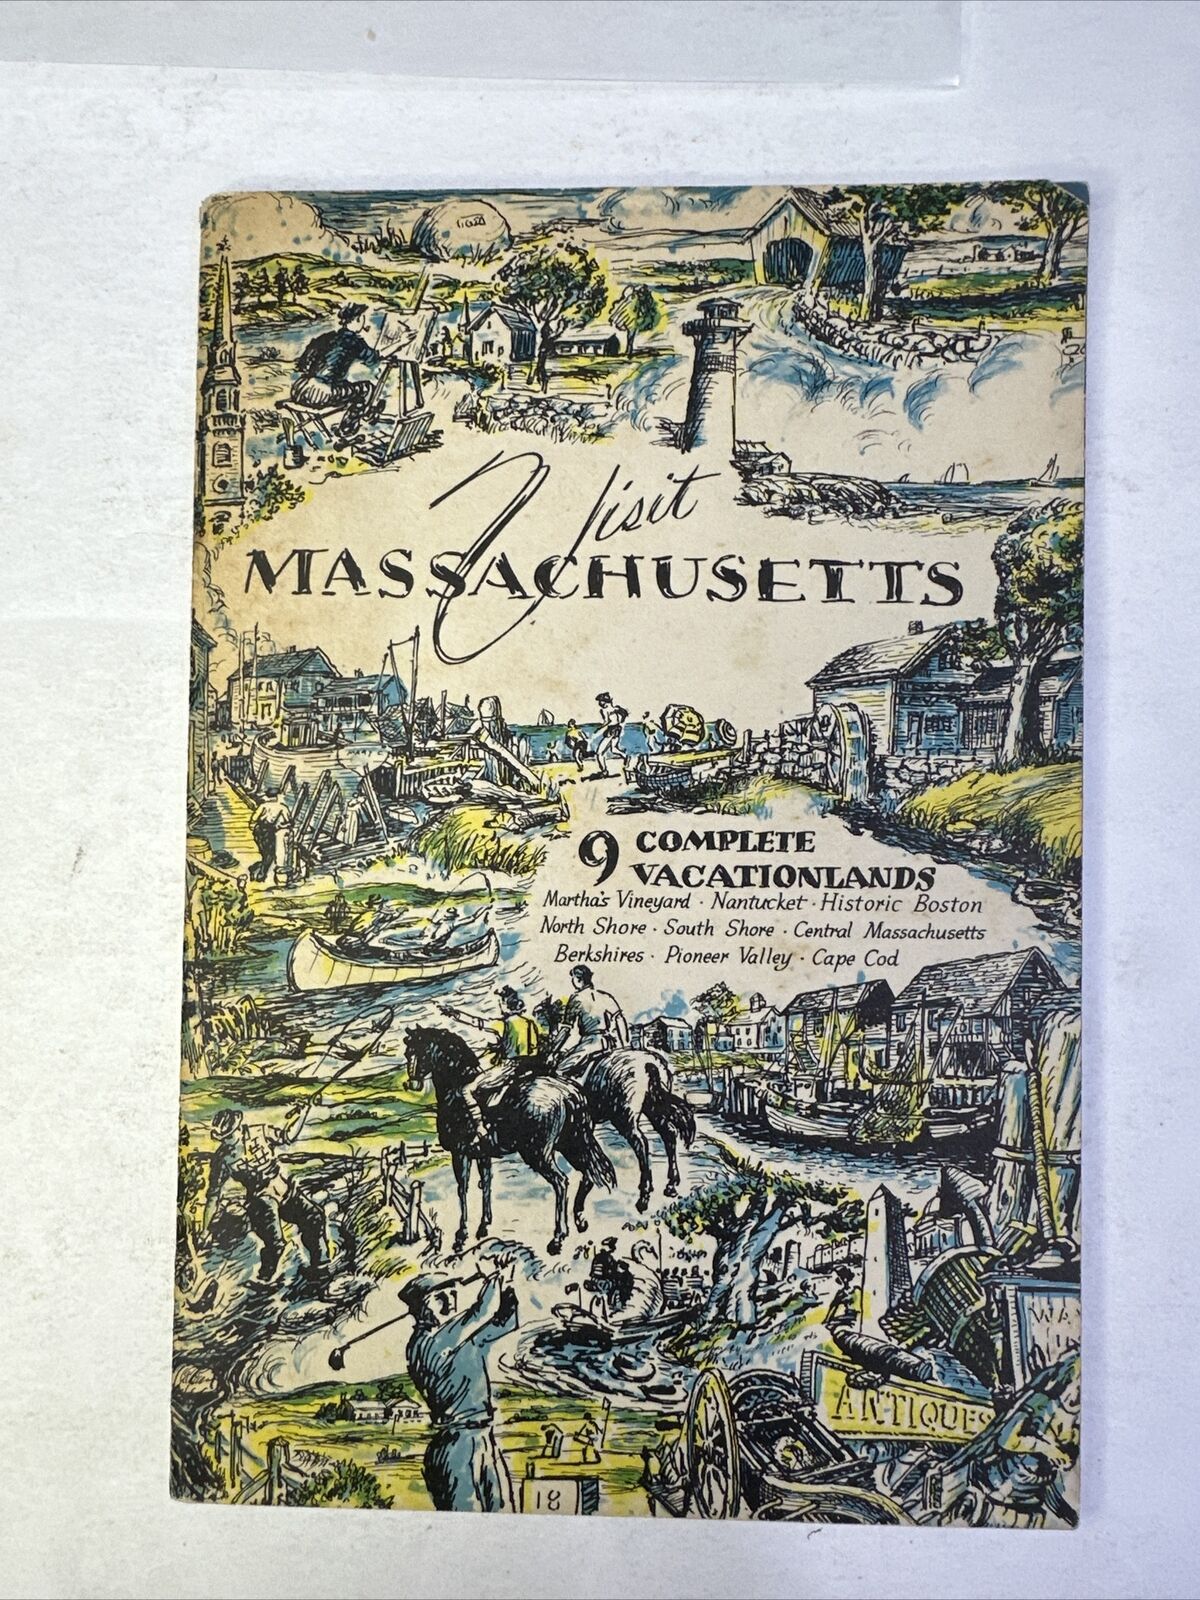 1950’s Visit Massachusetts Booklet 9 complete vacationlands